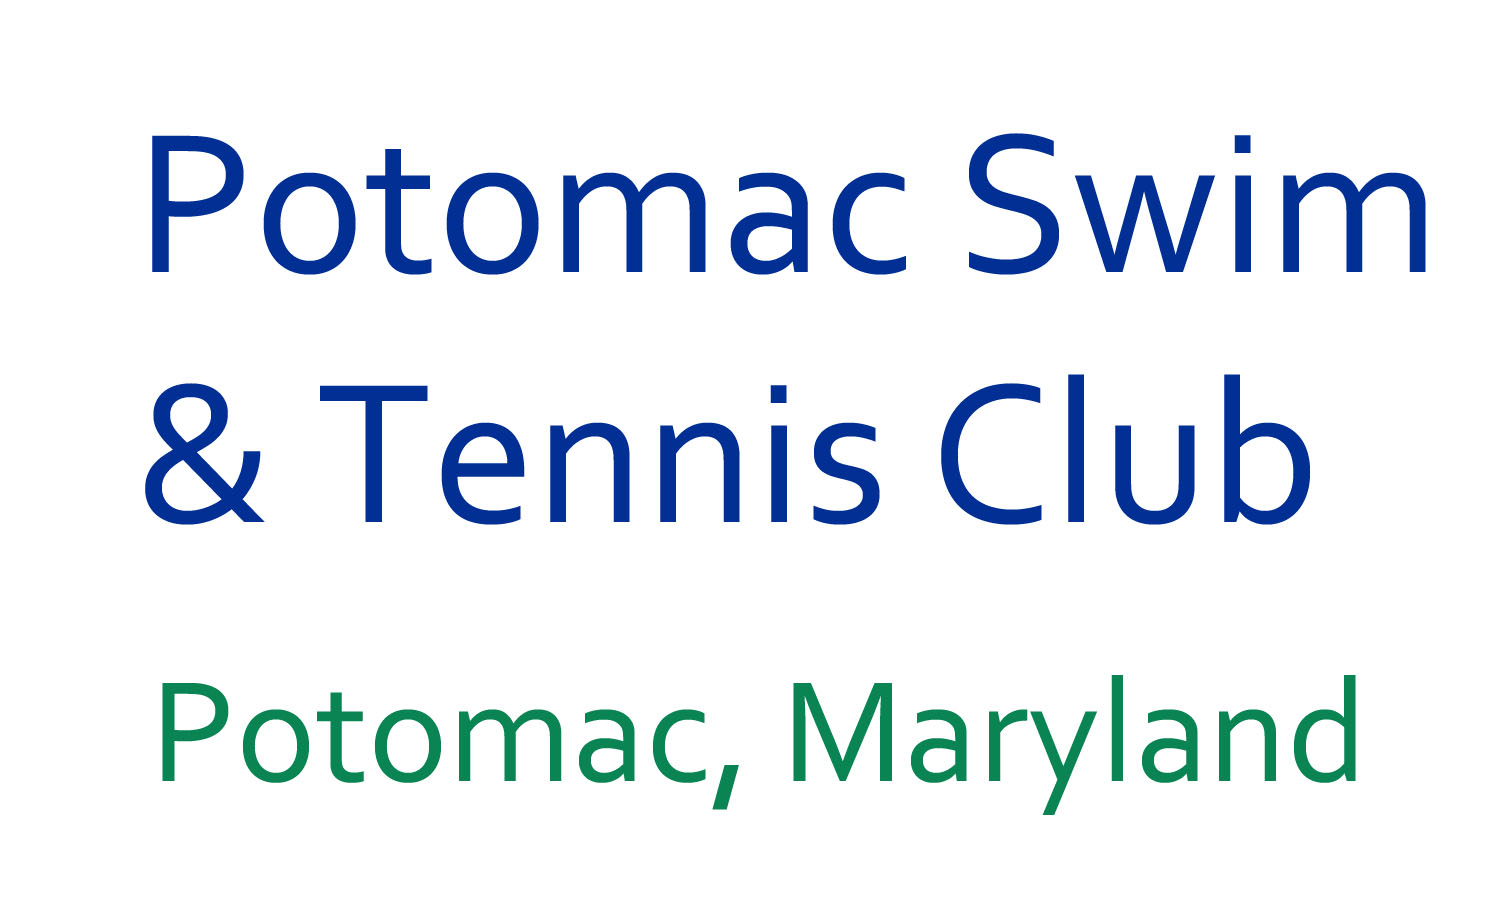 Potomac Swim & Tennis Club